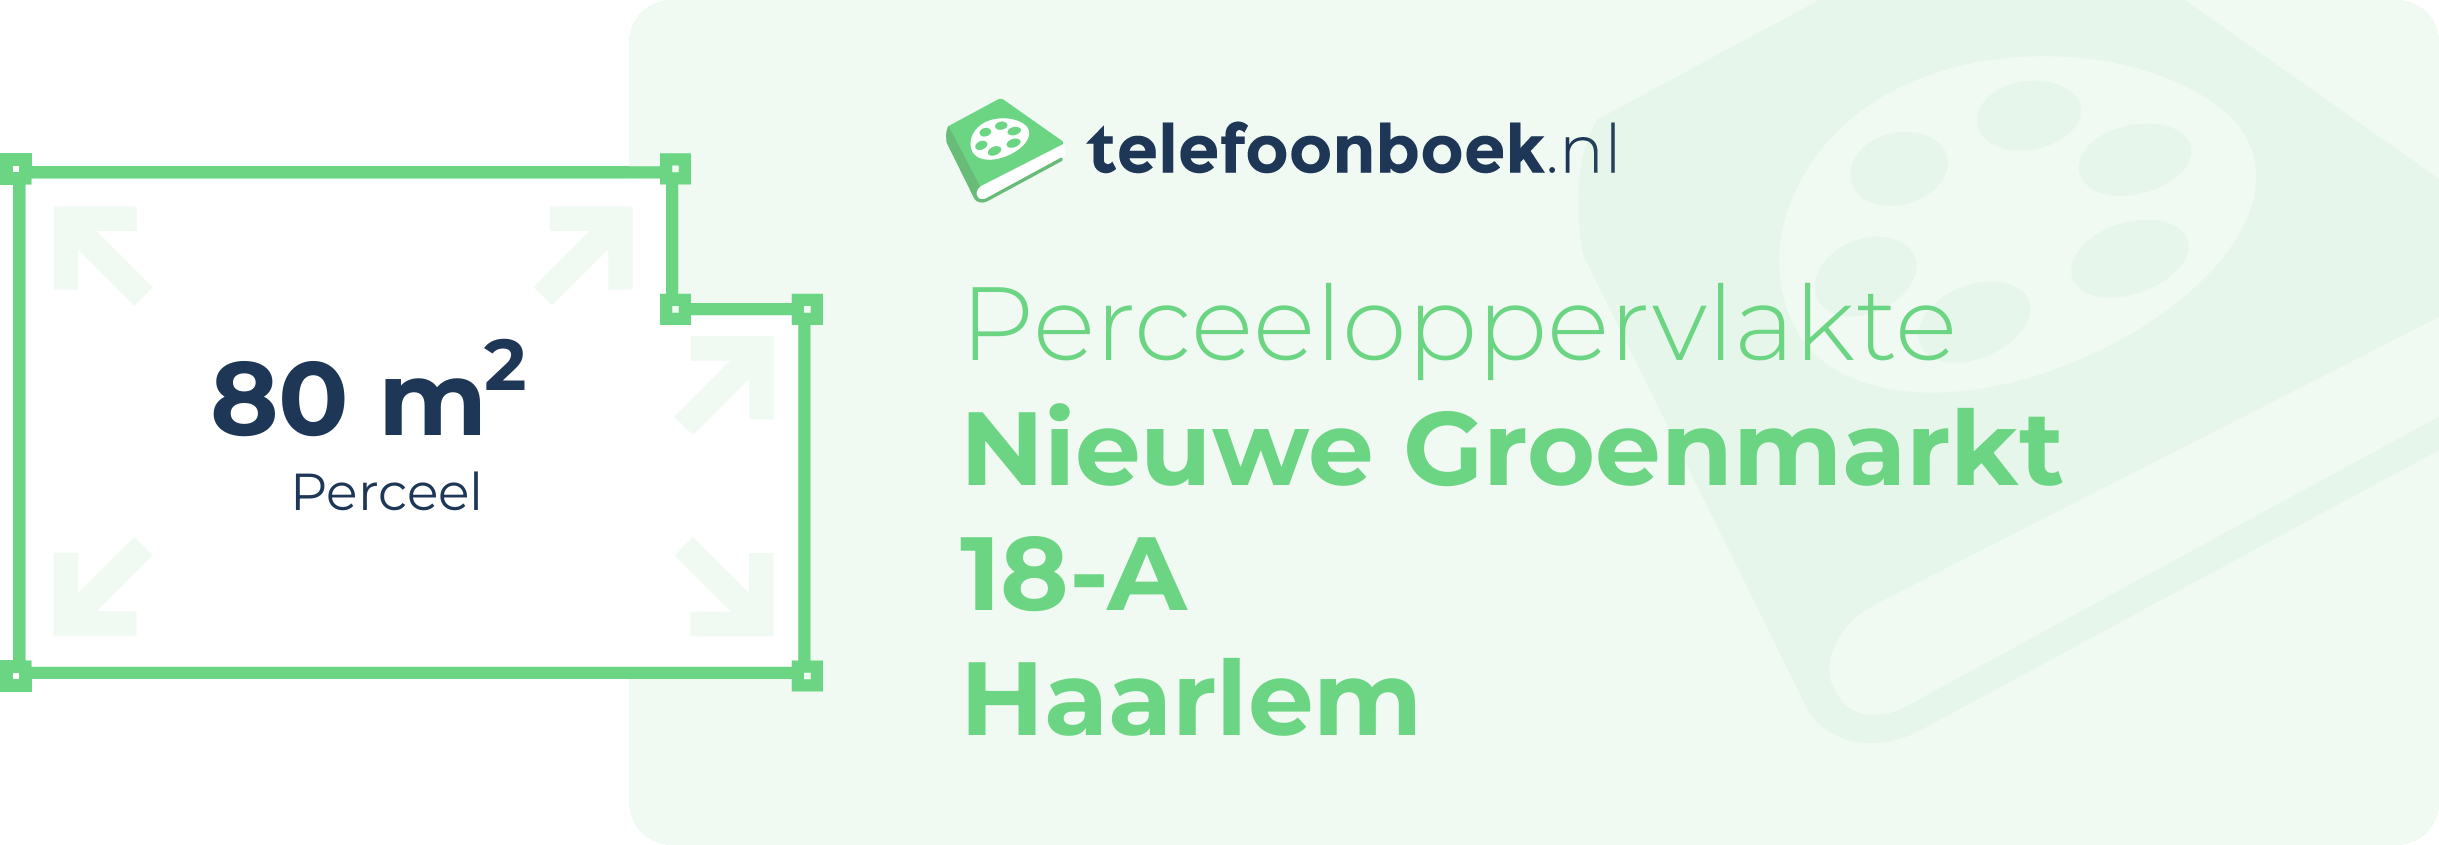 Perceeloppervlakte Nieuwe Groenmarkt 18-A Haarlem